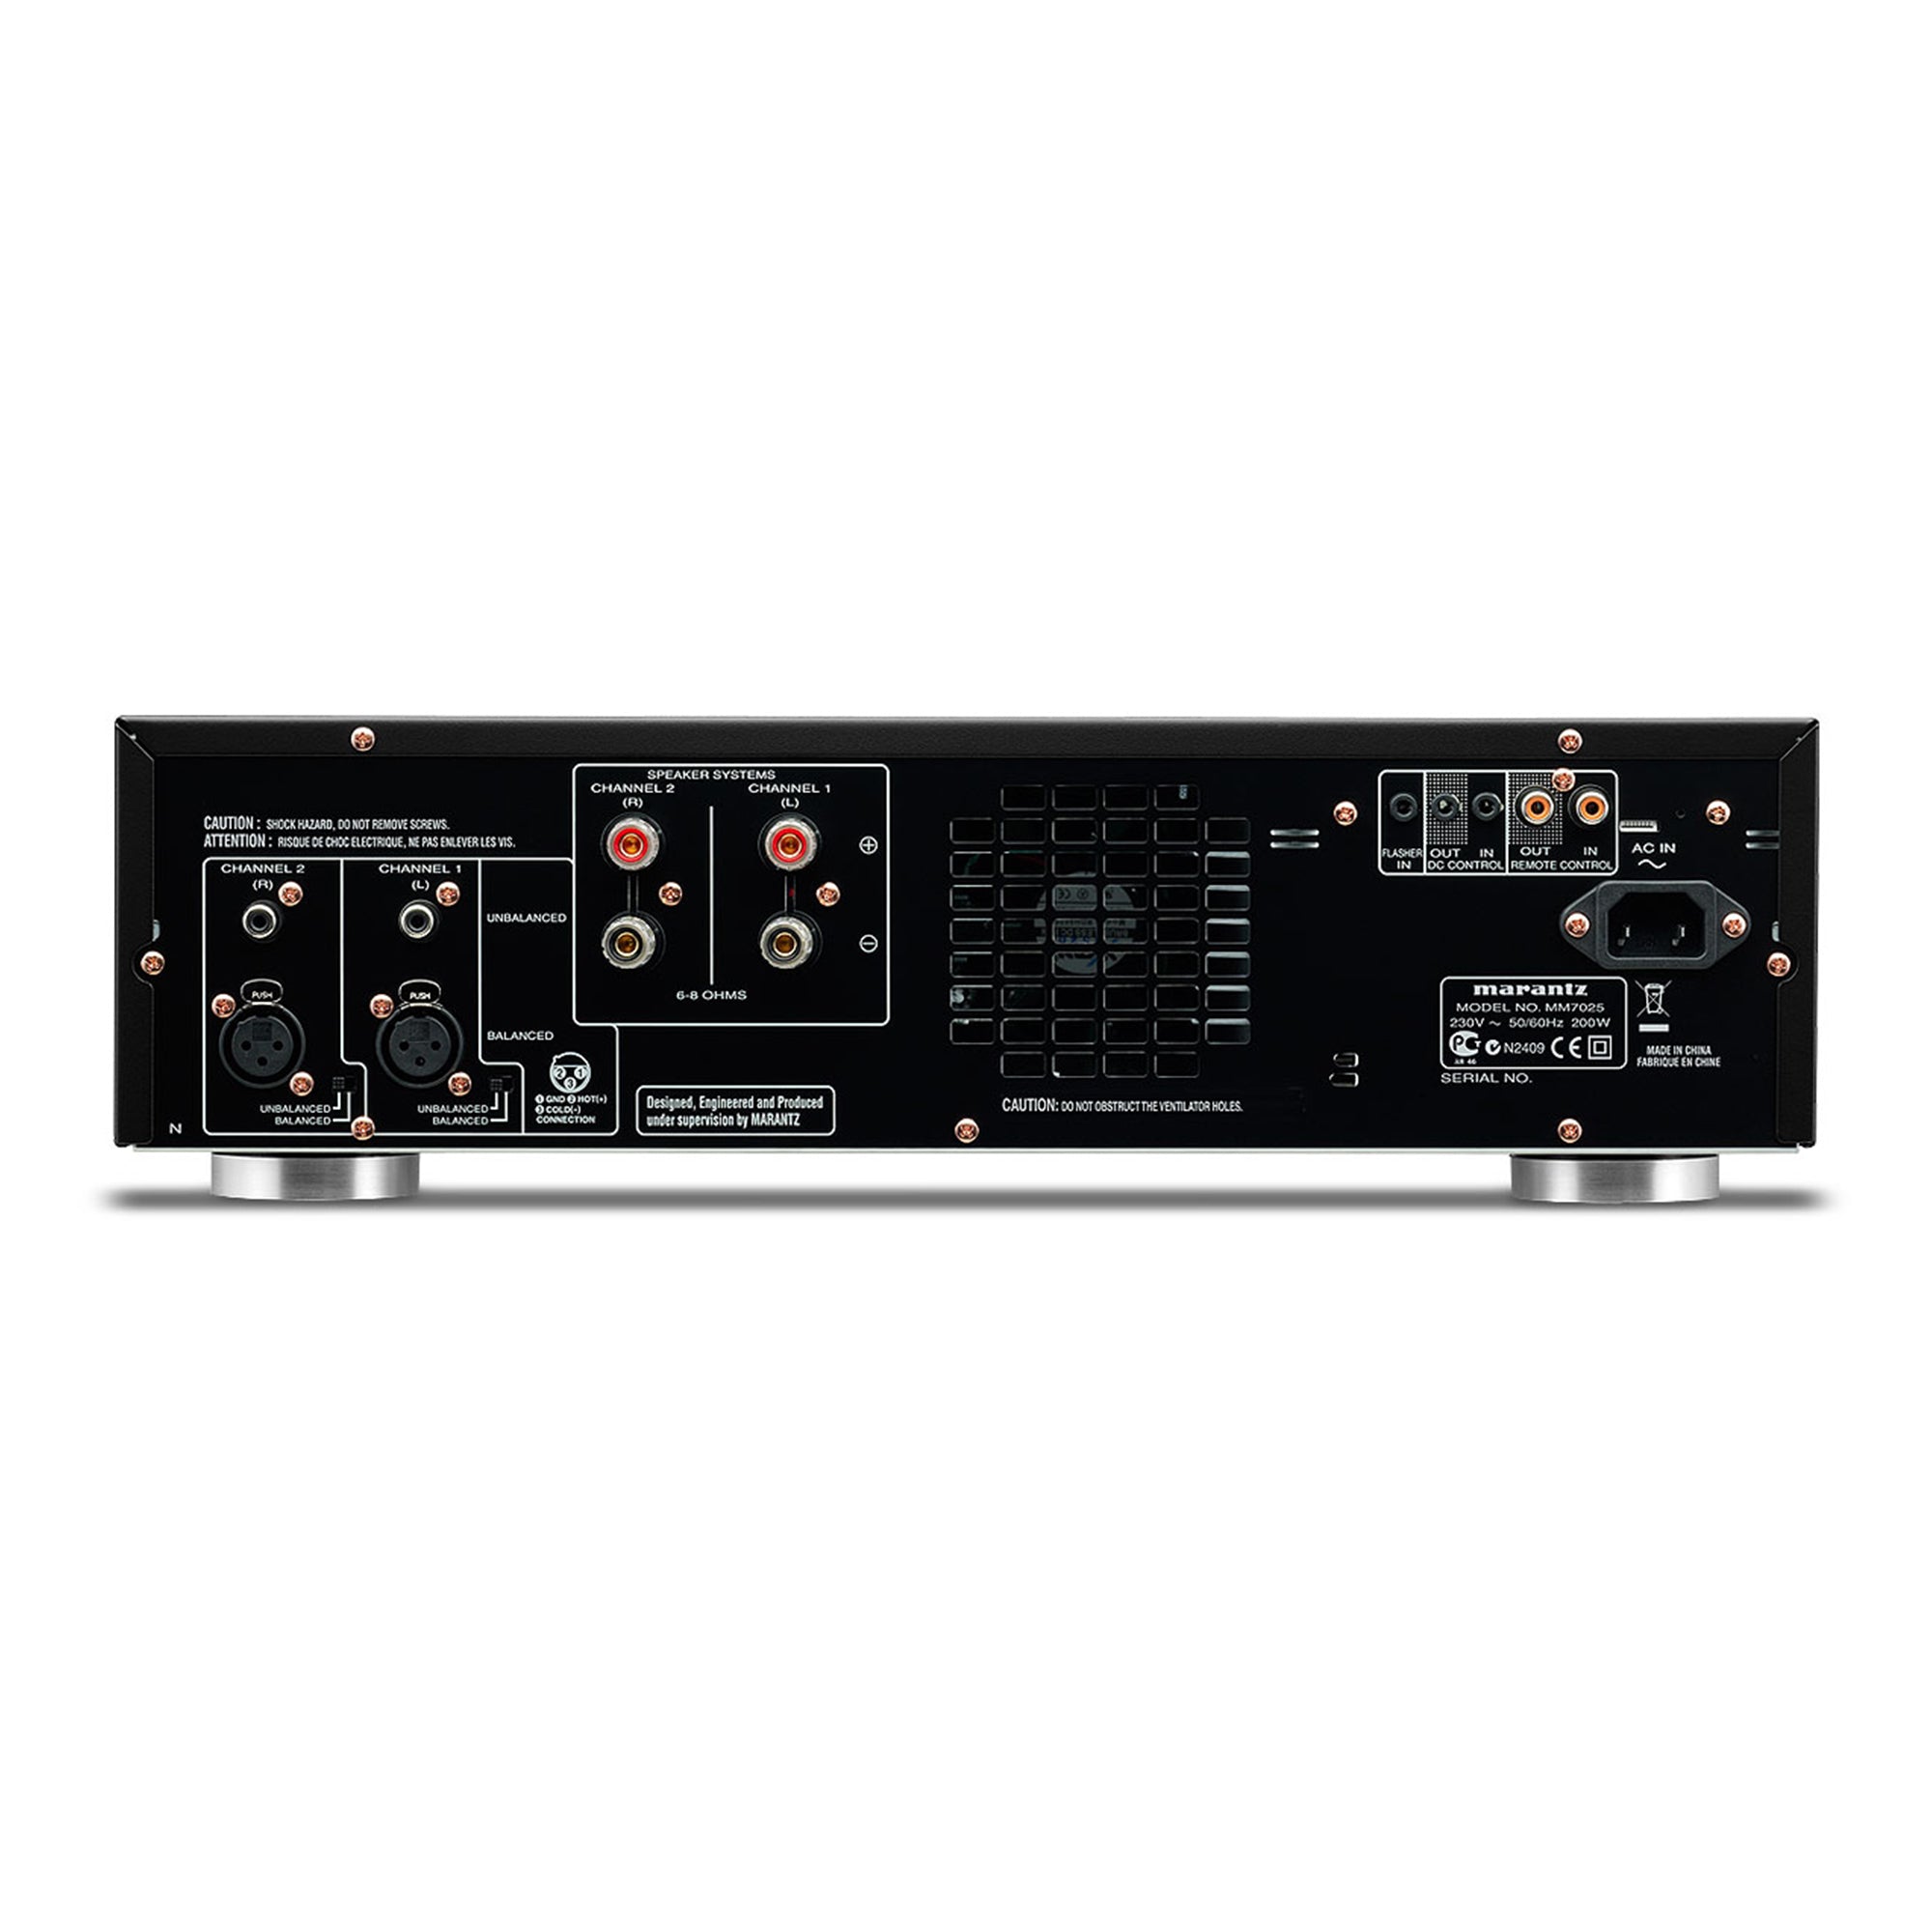 Marantz MM7025 power amplifier